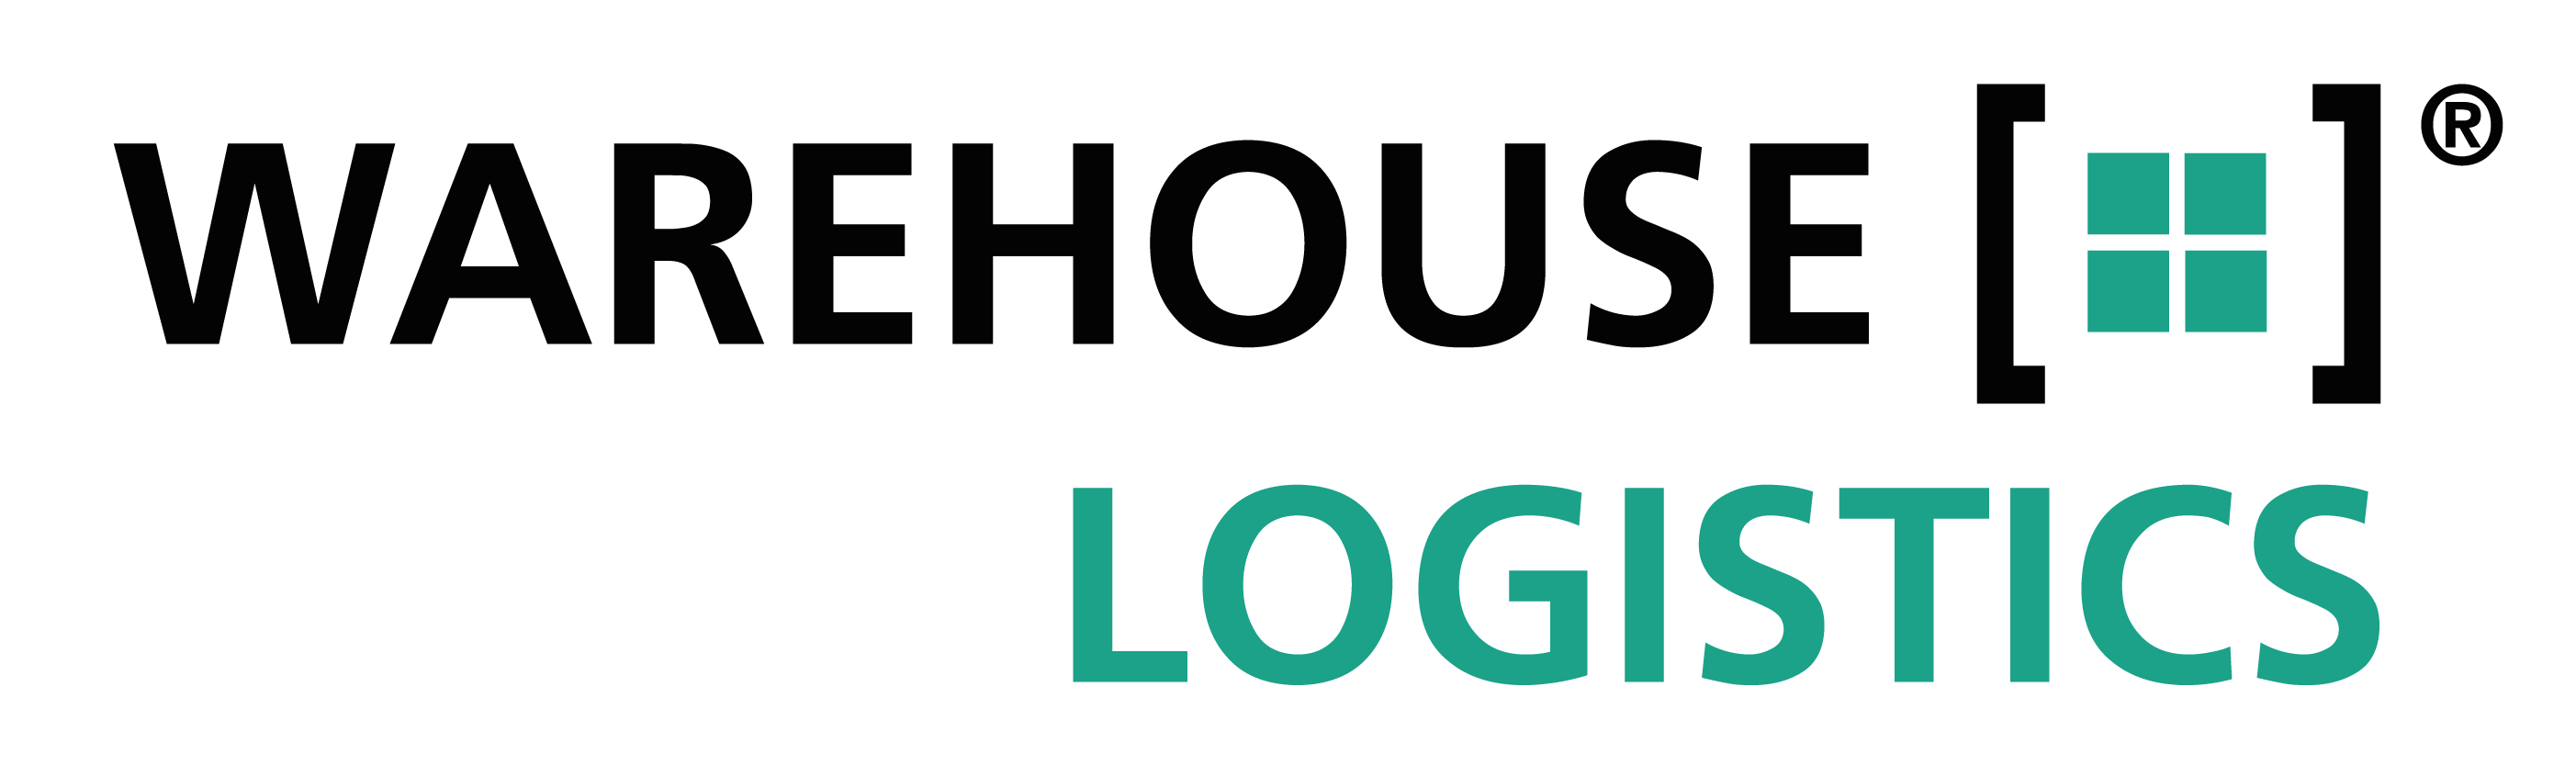 warehouse-logistics: warehouselogistics_Registrierung